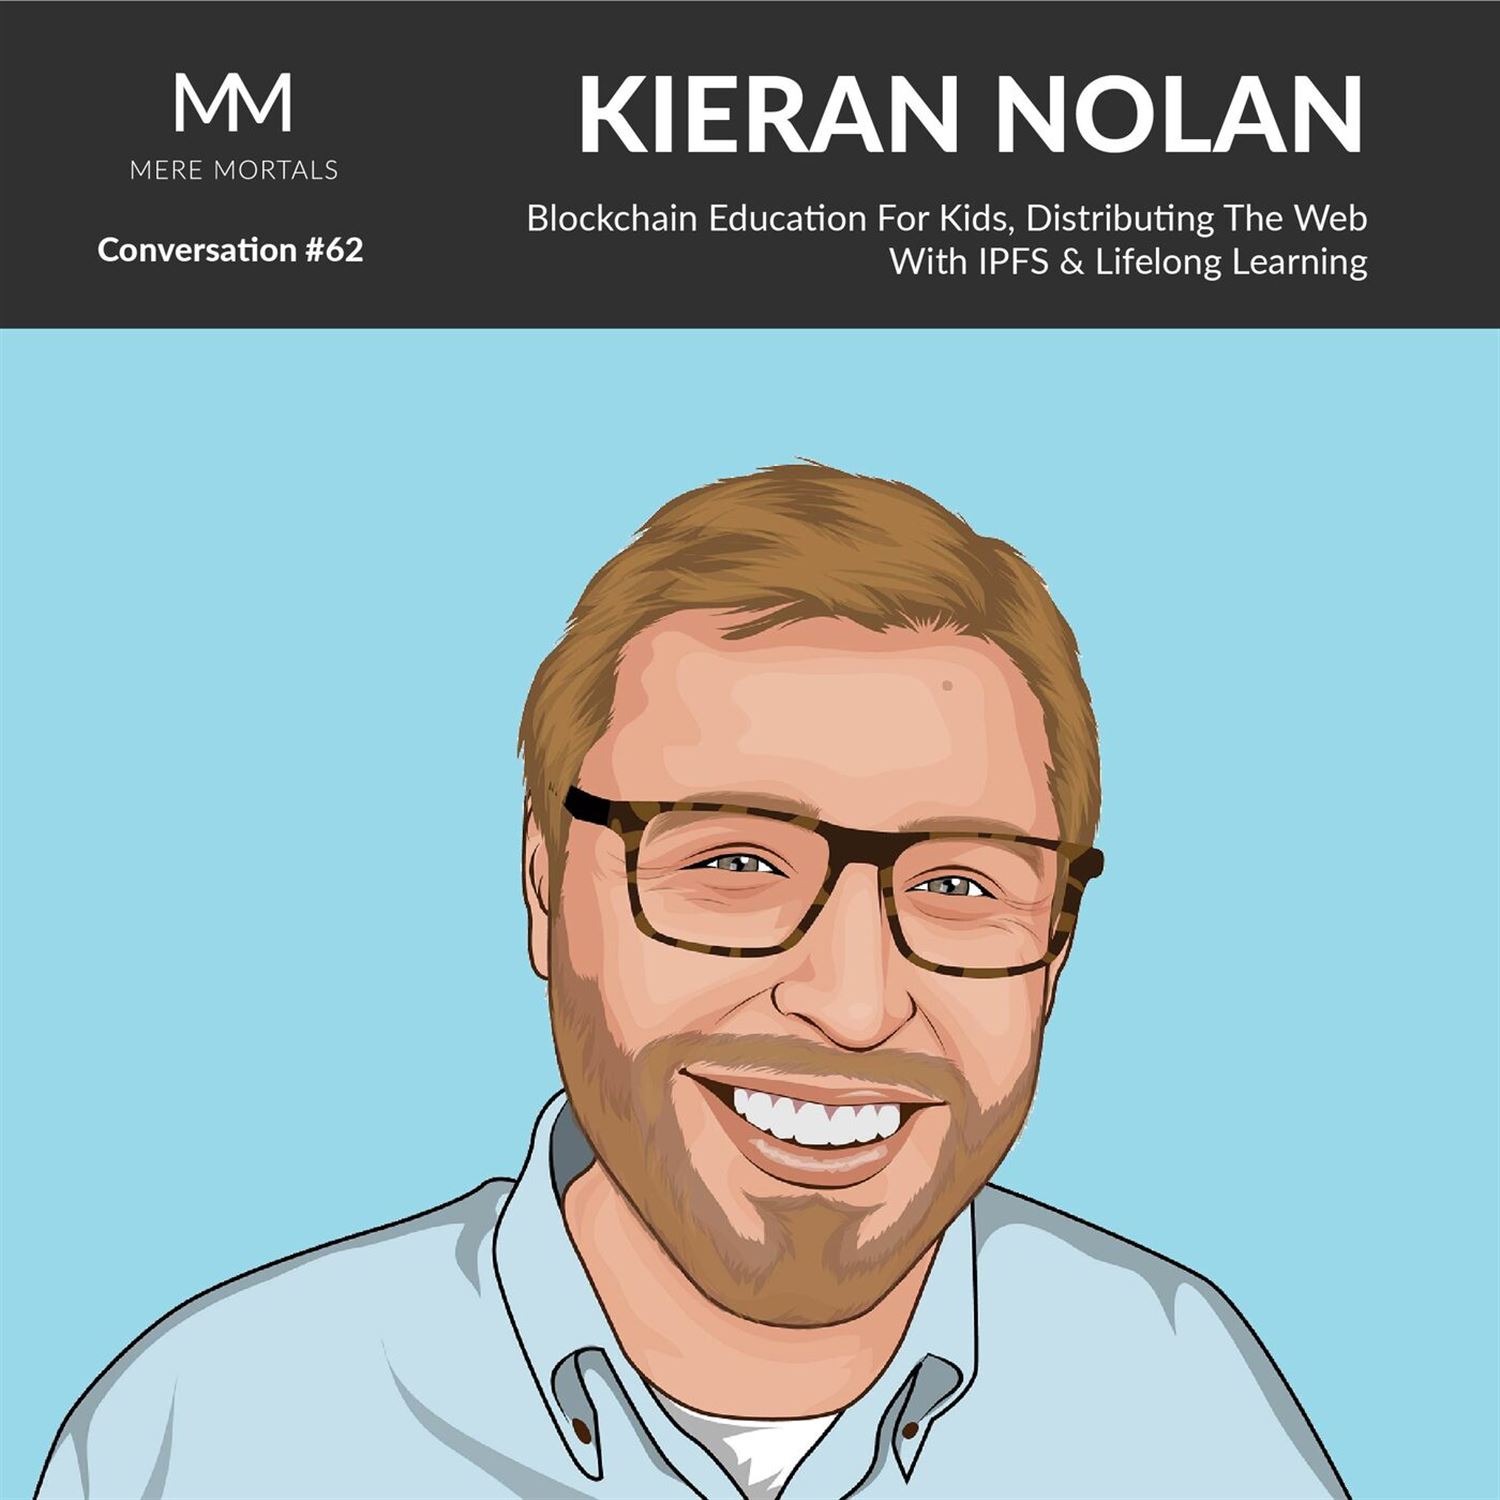 Find out more about Kieran & blockchain tech